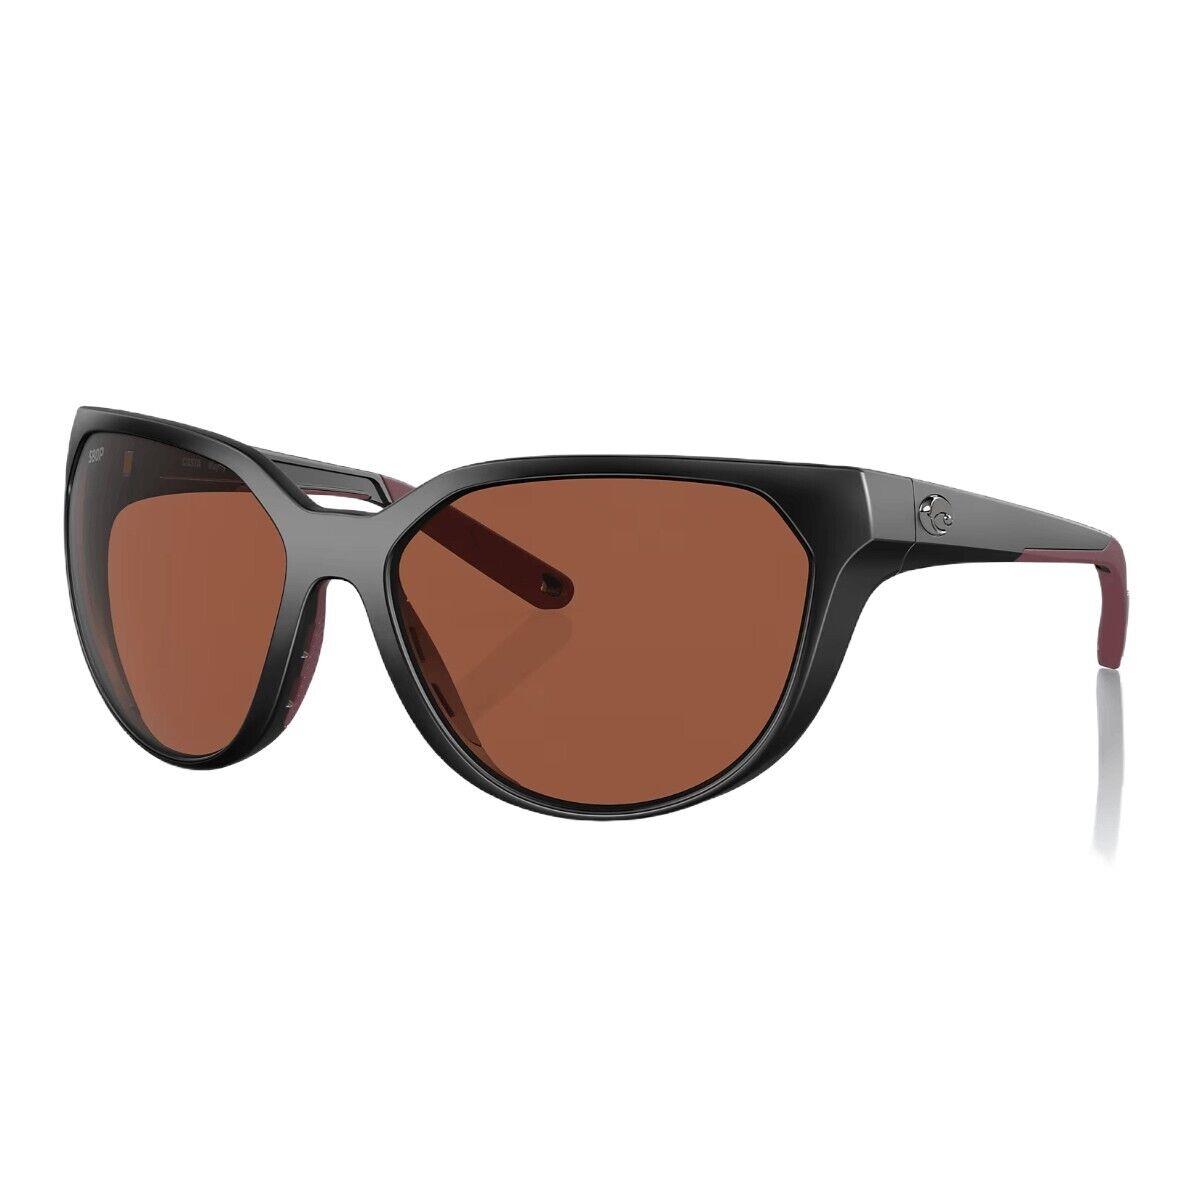 Costa Del Mar Mayfly Sunglasses Matte Black Frame w/ Copper Polarized 580P Lens